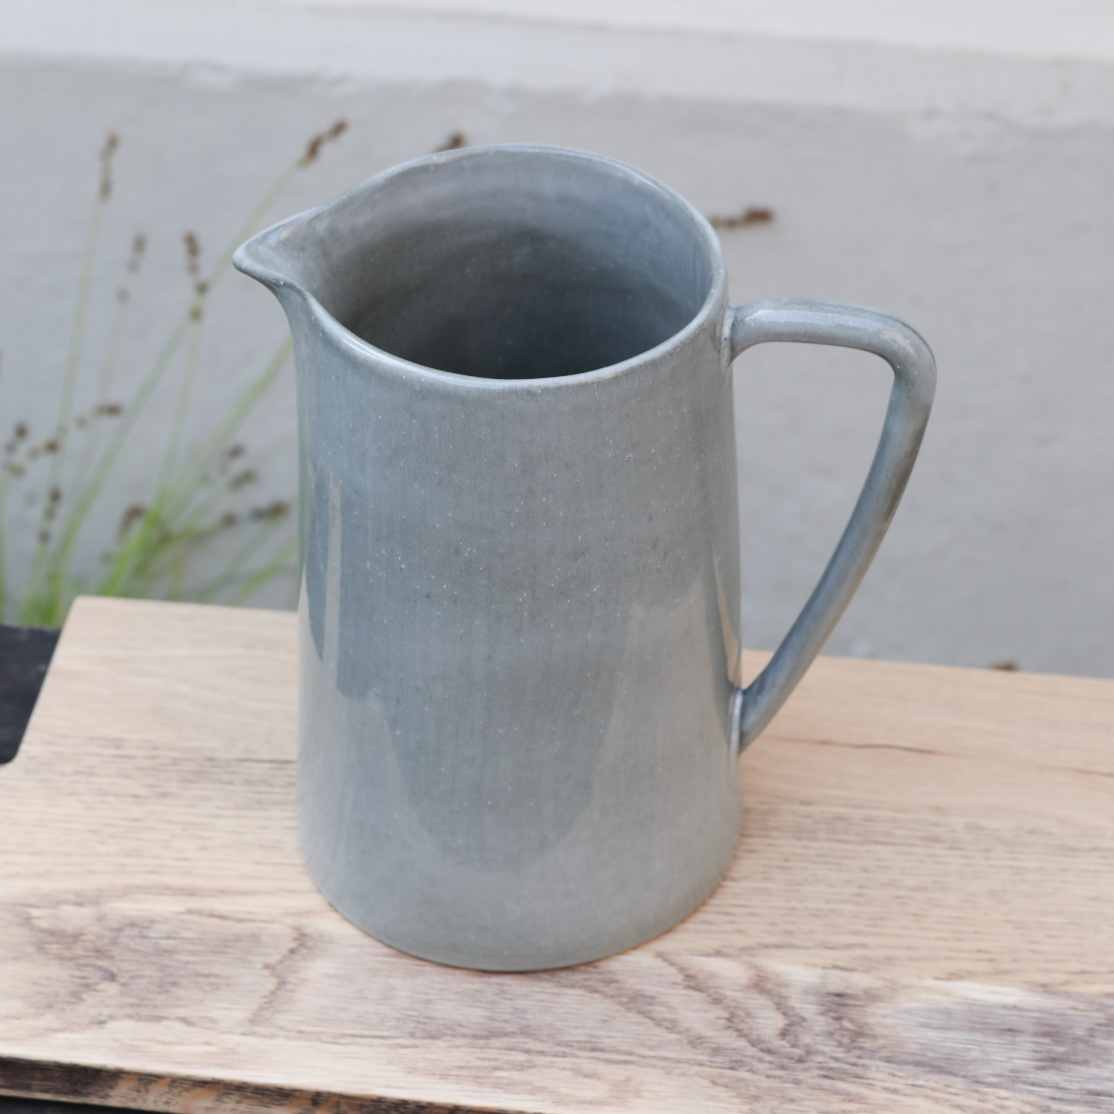 Gray blue jug water jug tea jug large 2l stoneware ceramic clay